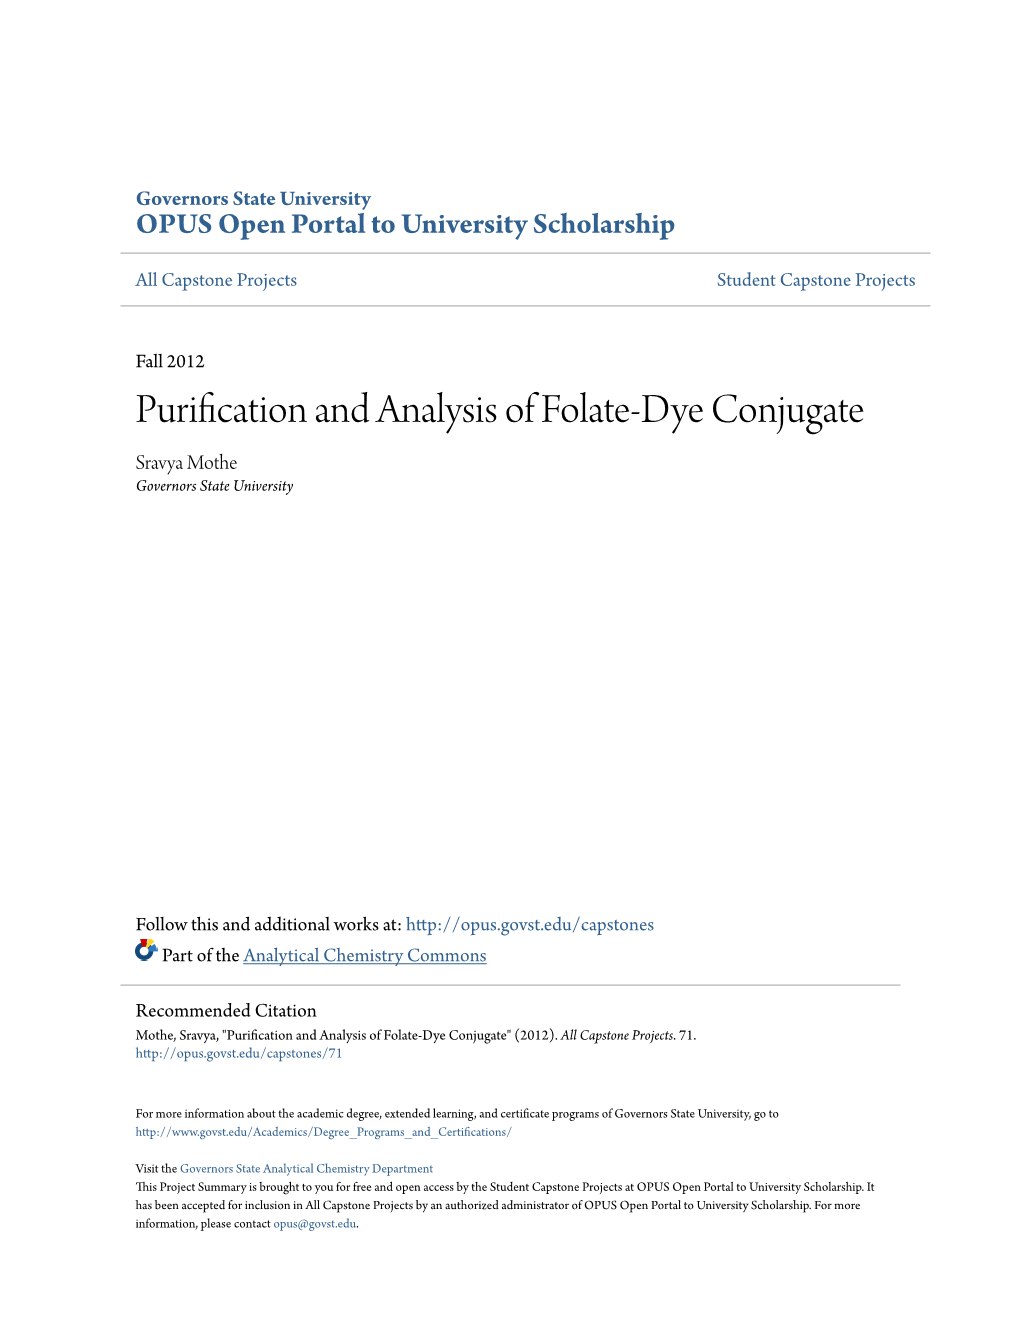 Purification and Analysis of Folate-Dye Conjugate Sravya Mothe Governors State University